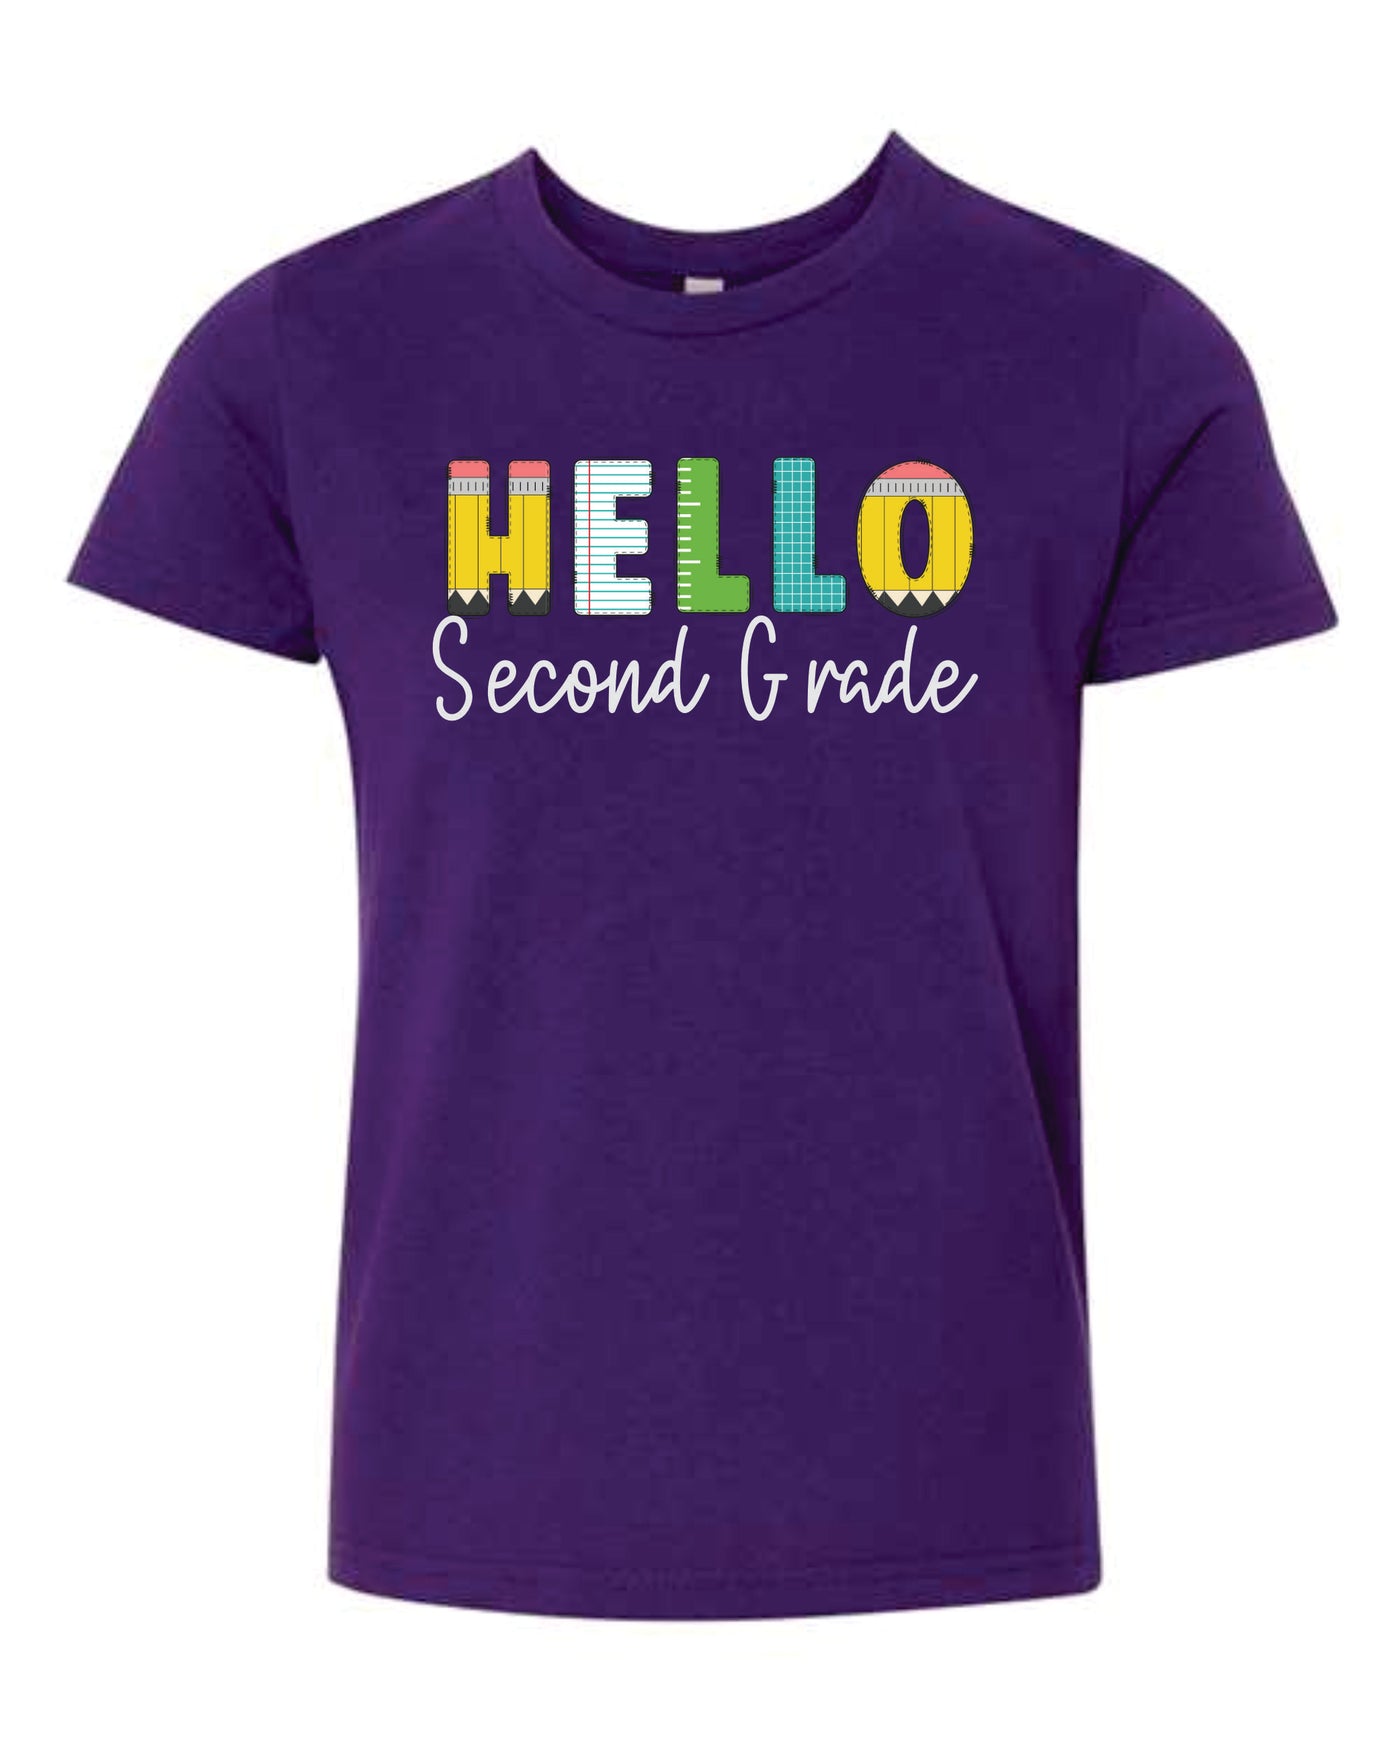 Hello School Short Sleeve Graphic T-shirt